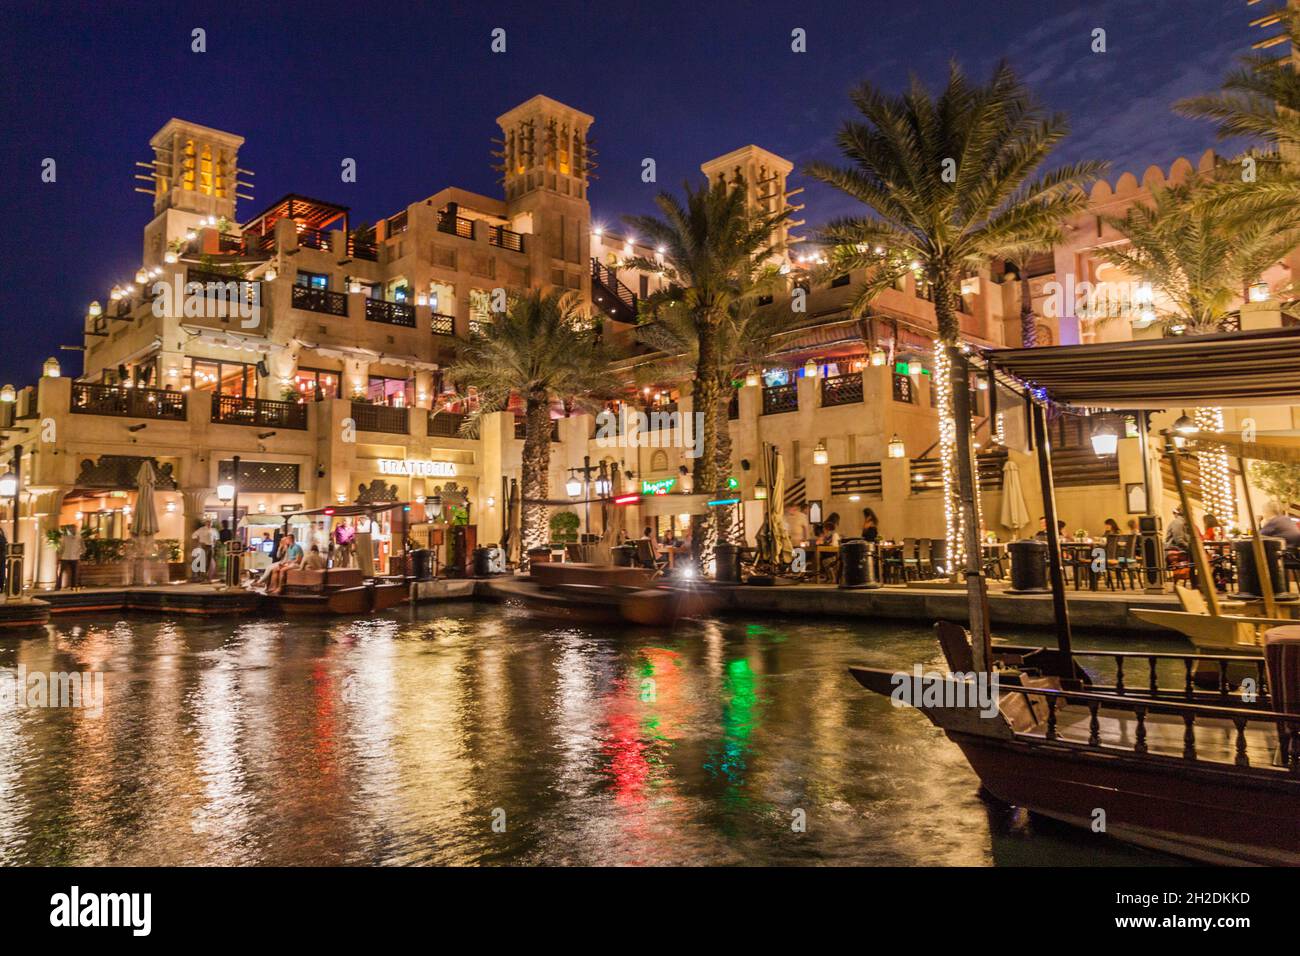 DUBAI, UAE - MARCH 11, 2017: Night view of Madinat Jumeirah in Dubai, United Arab Emirates Stock Photo